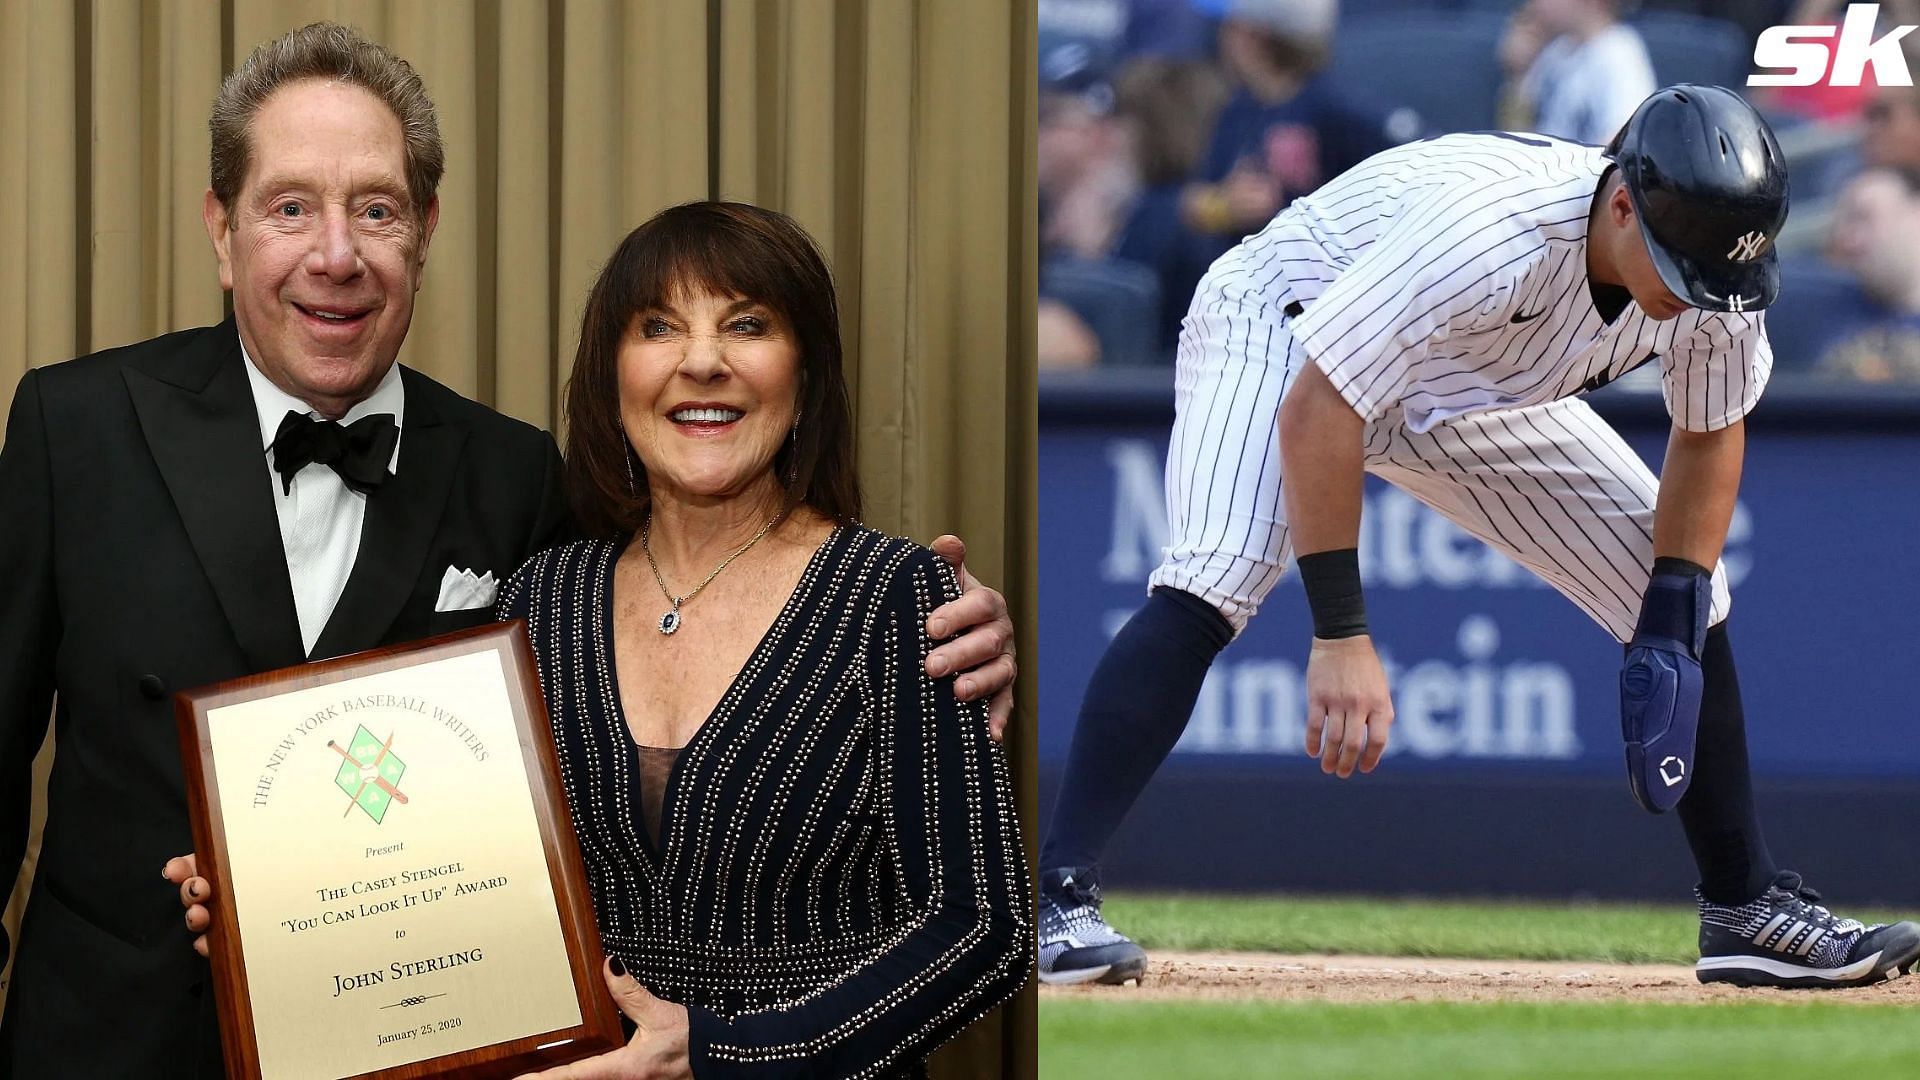 New York Yankees Broadcaster Suzyn Waldman